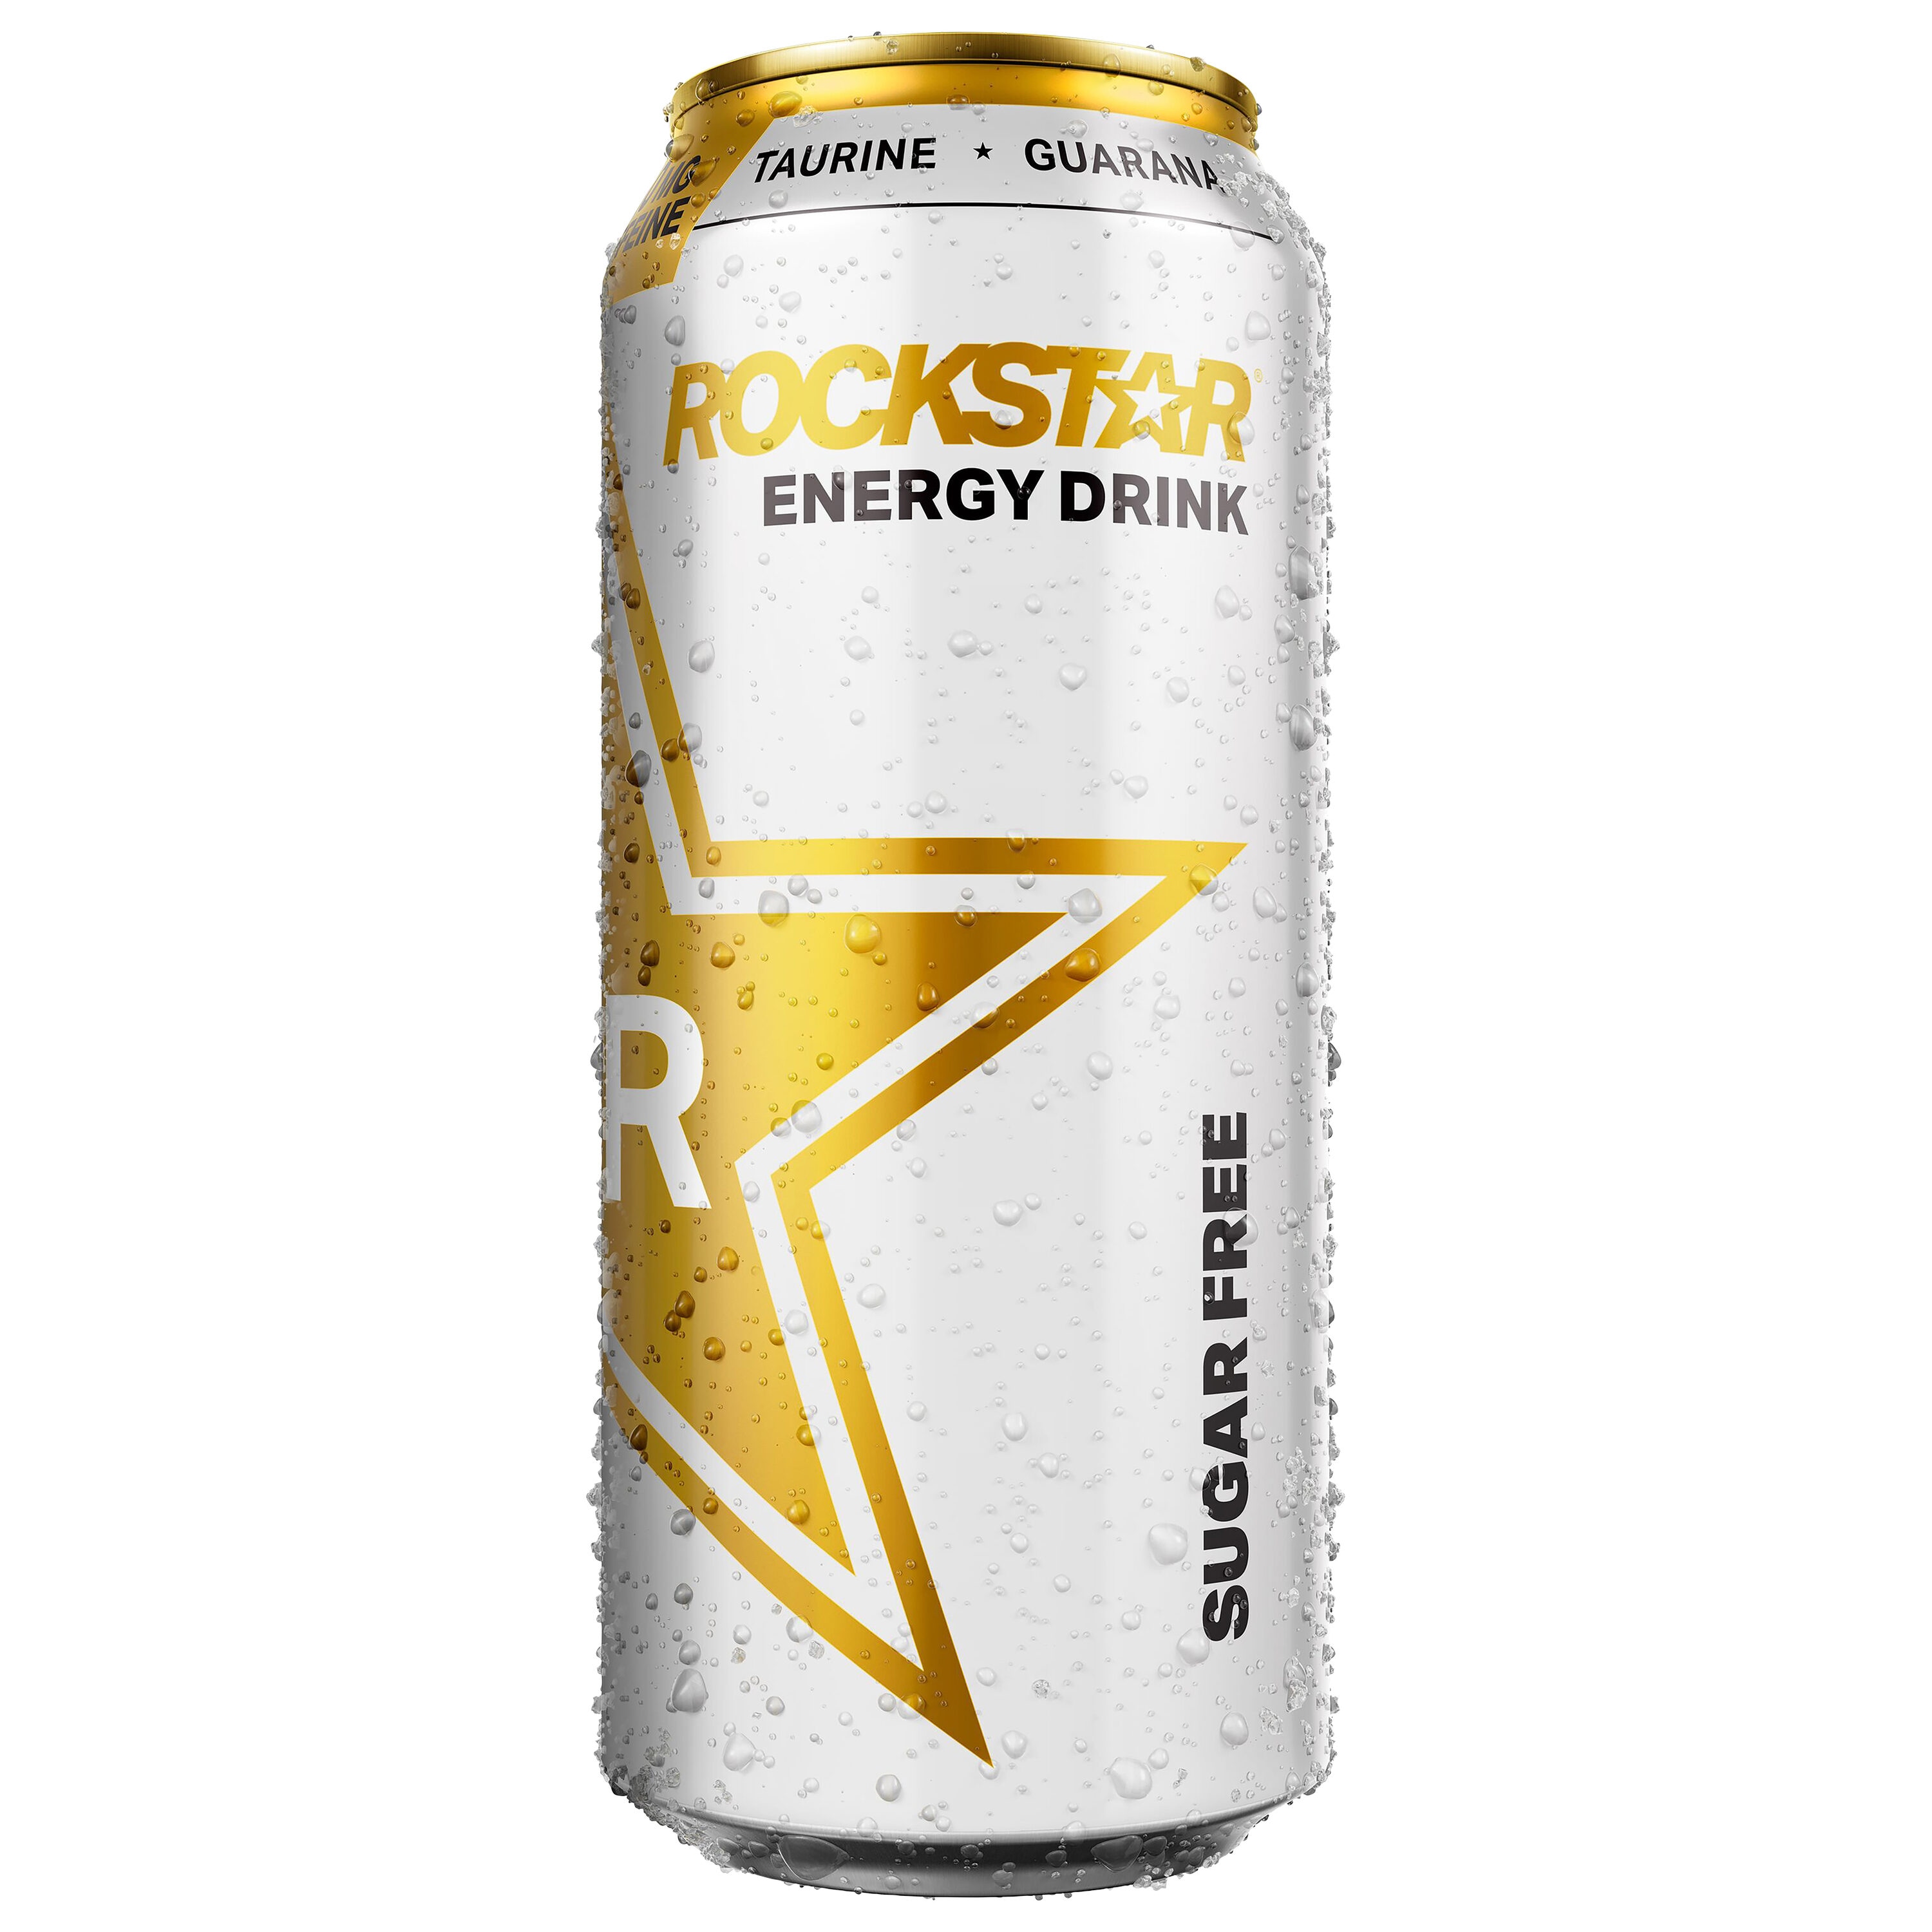  Rockstar Energy Drink, Original, 16oz Cans (24 Pack) : Grocery  & Gourmet Food